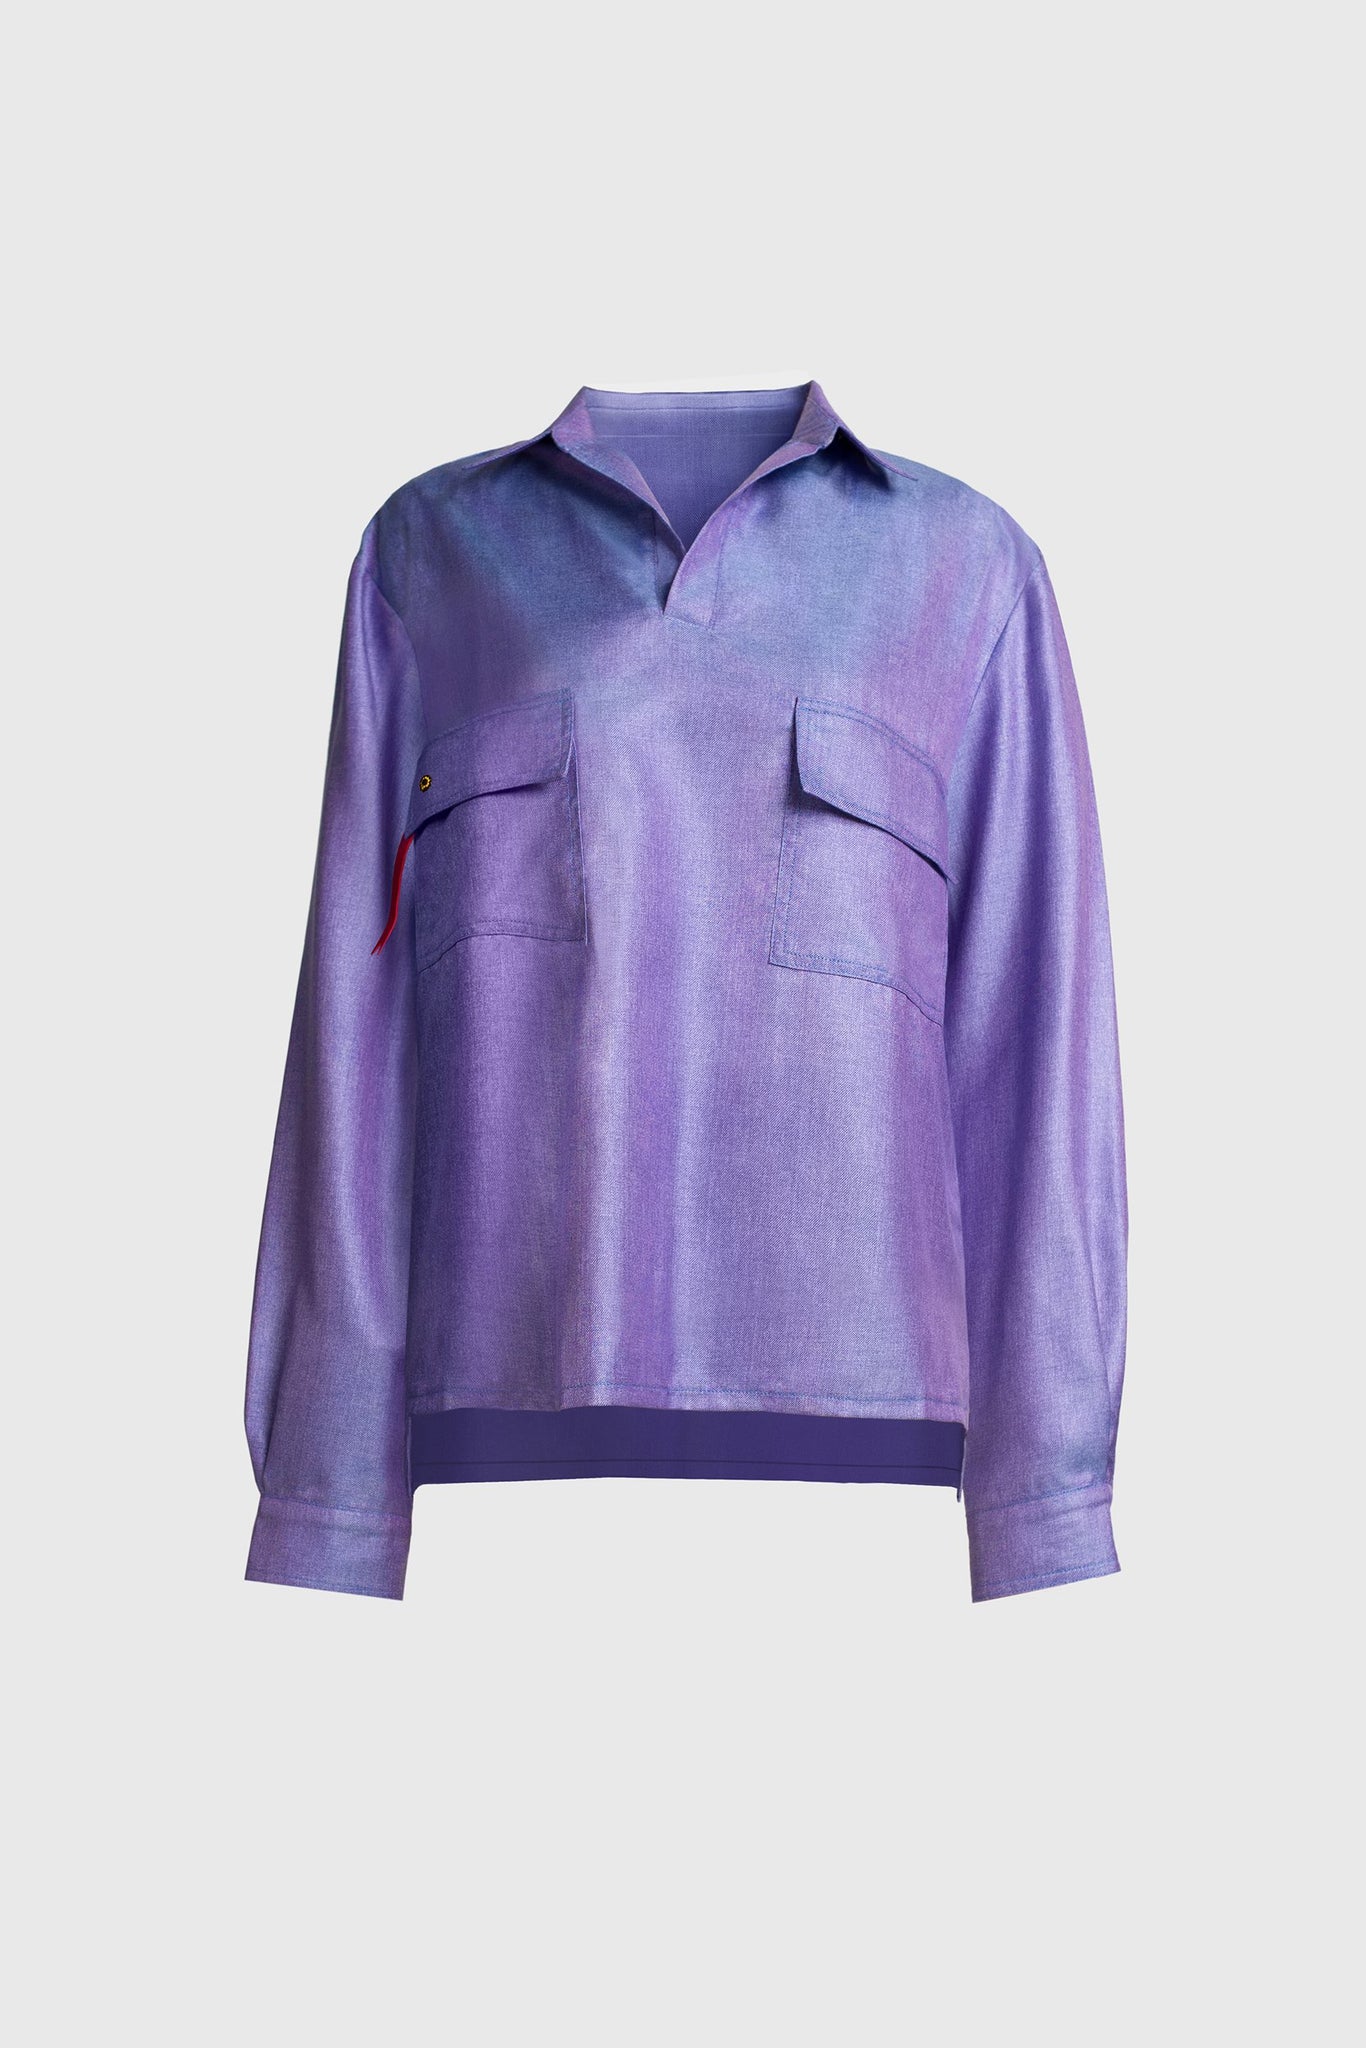 Loose Fit Woven Silk Purple Blue Shirt